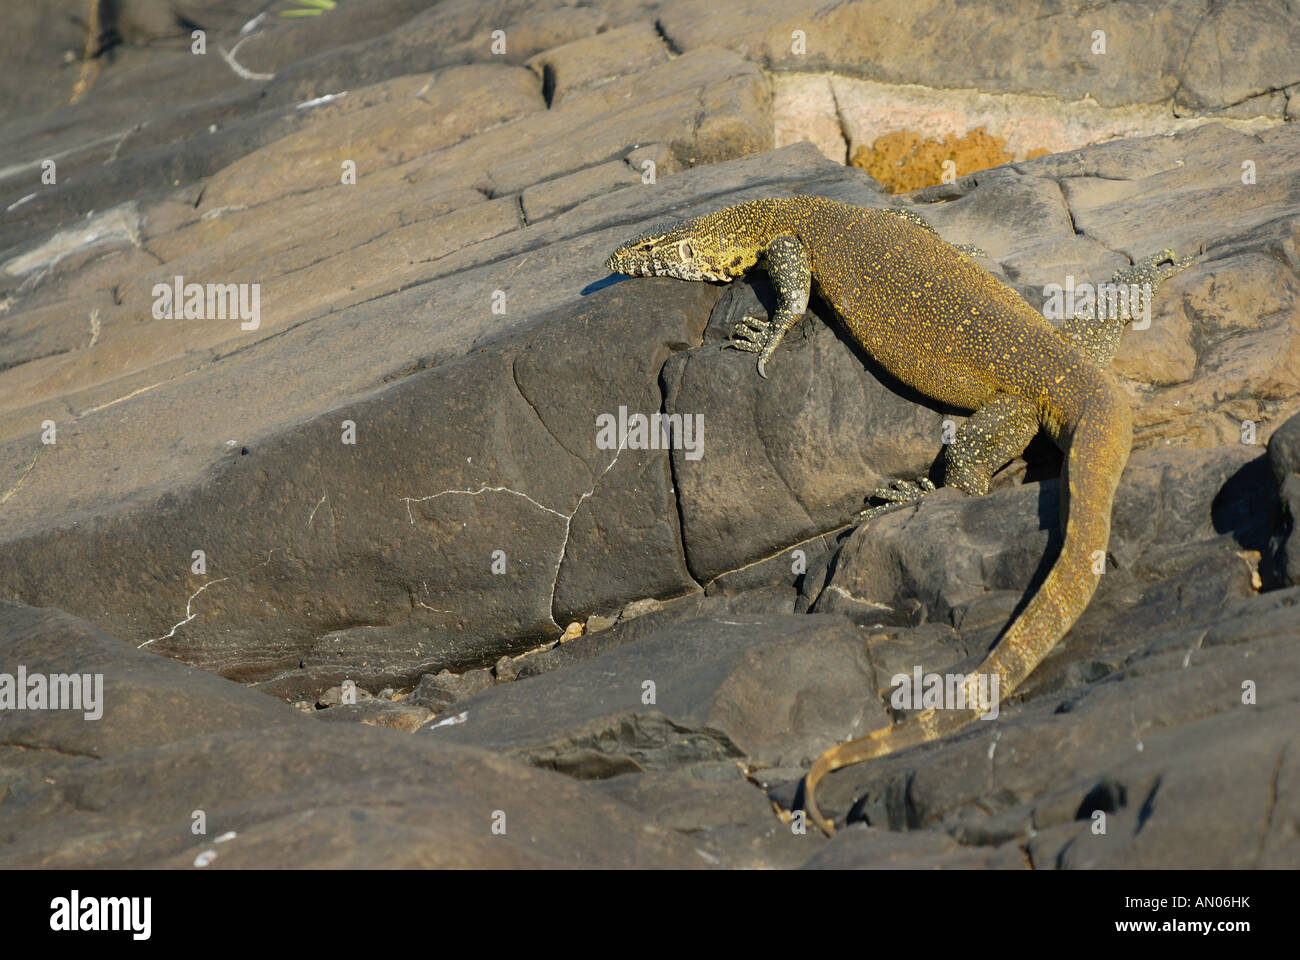 nile monitor on rocks / Varanus niloticus Stock Photo